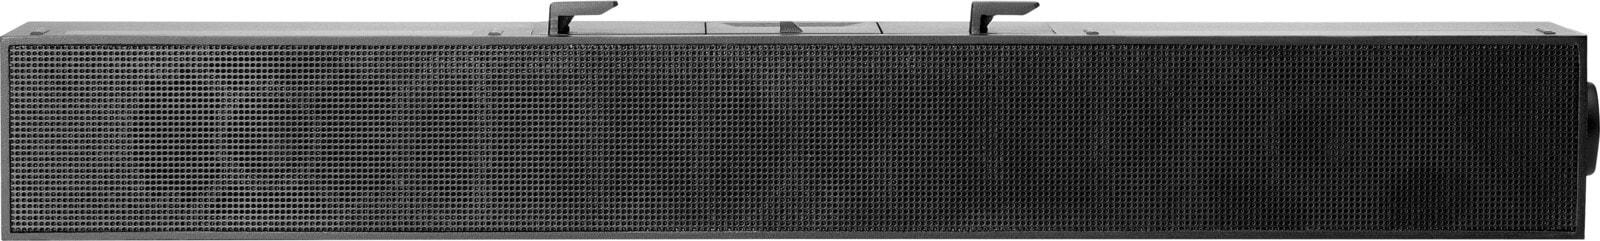 Звуковая панель HP S101 Speaker bar 5UU40AA